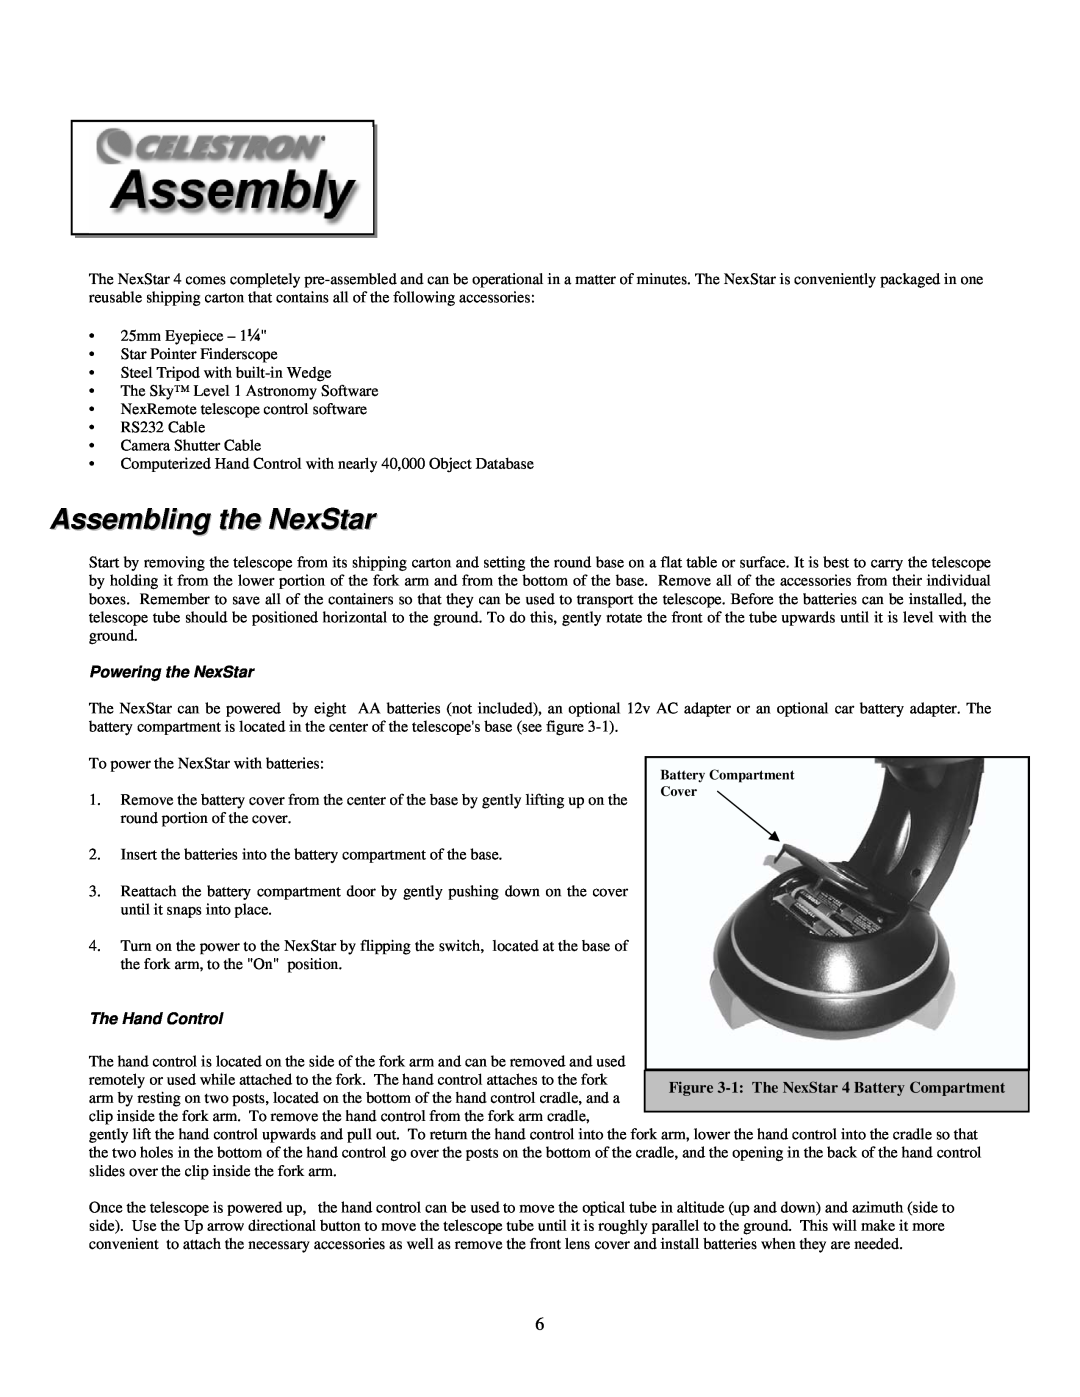 Celestron 4SE instruction manual Assembling the NexStar, Powering the NexStar, The Hand Control 